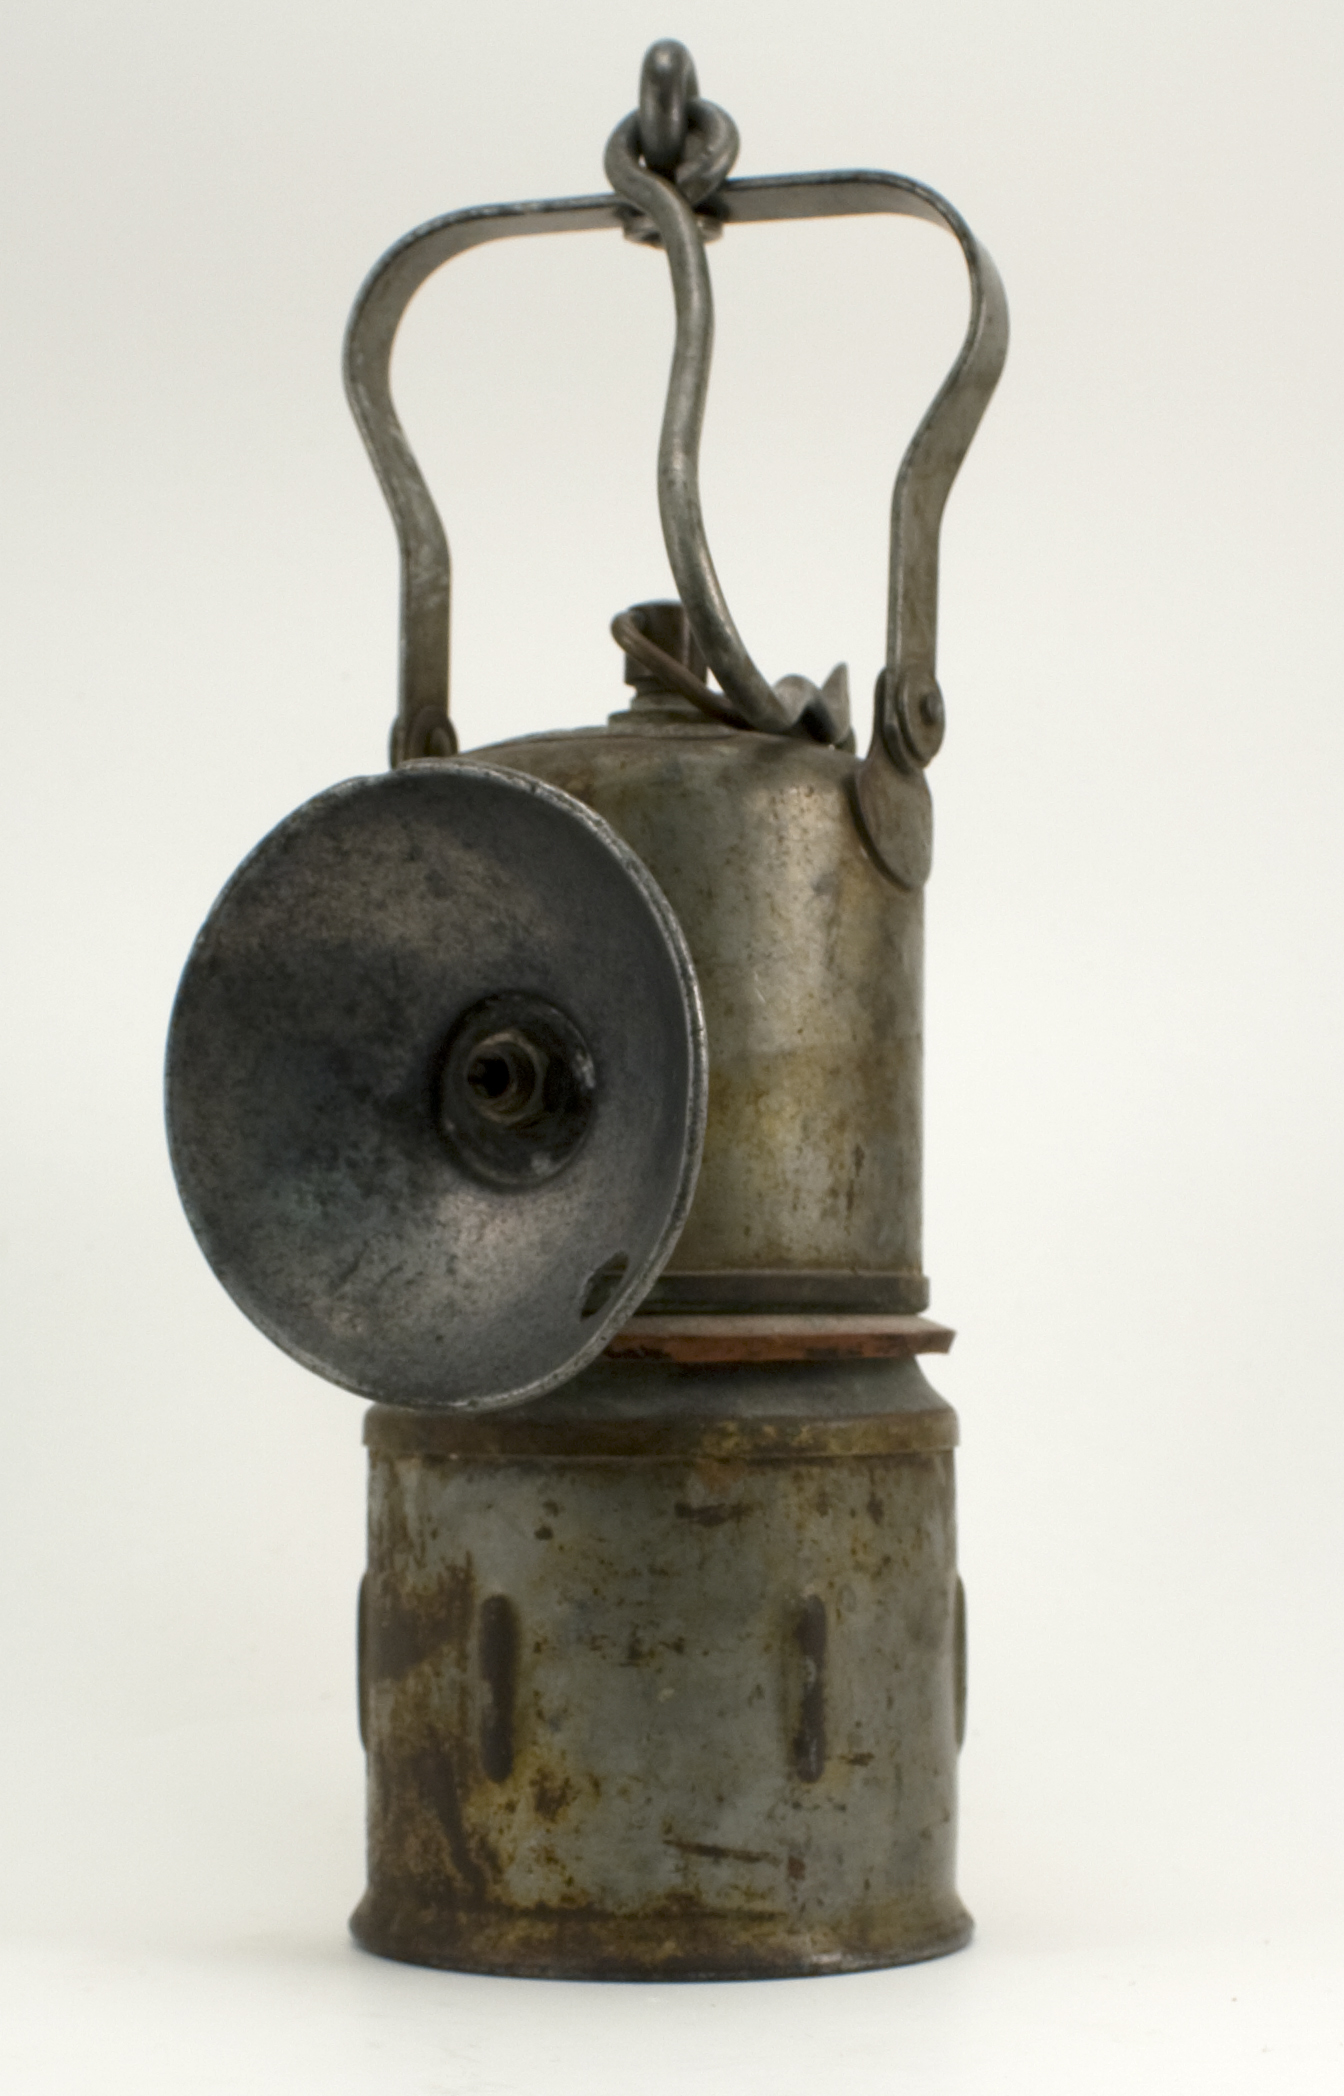 Carbide lamp, 1890s